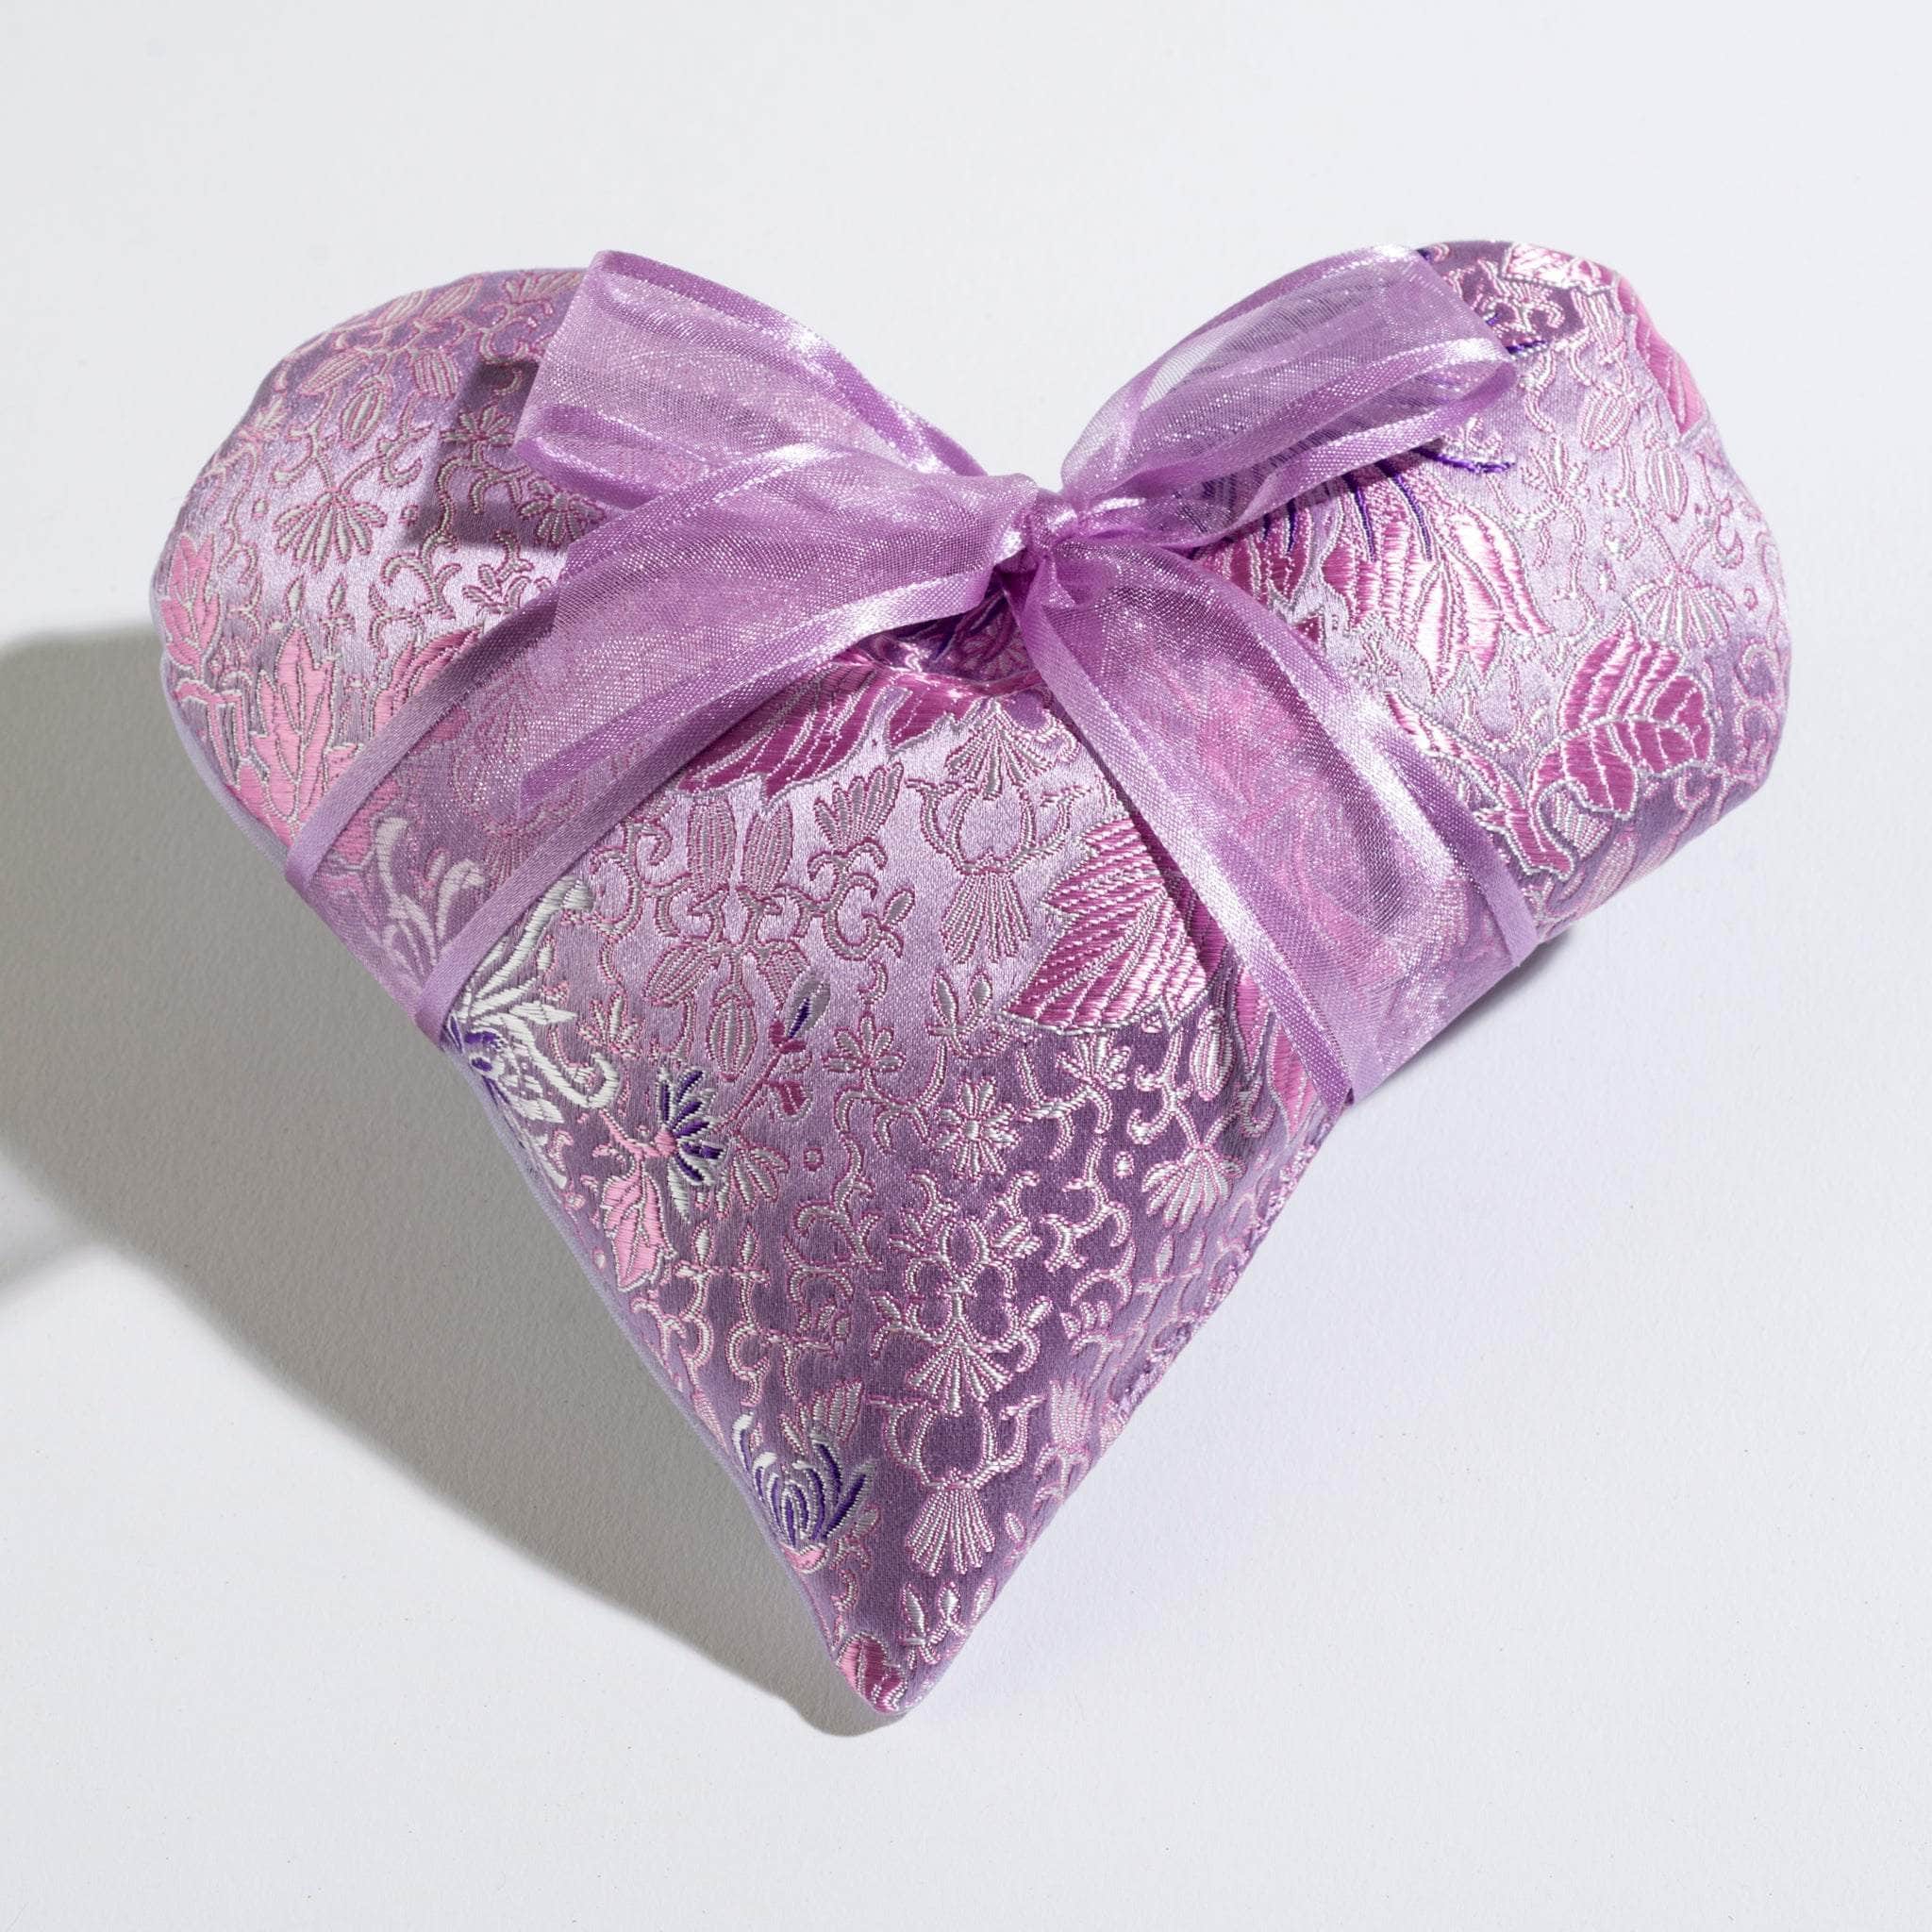 Lavender Heart Sachet in Chrysanthemum Brocade Fabric